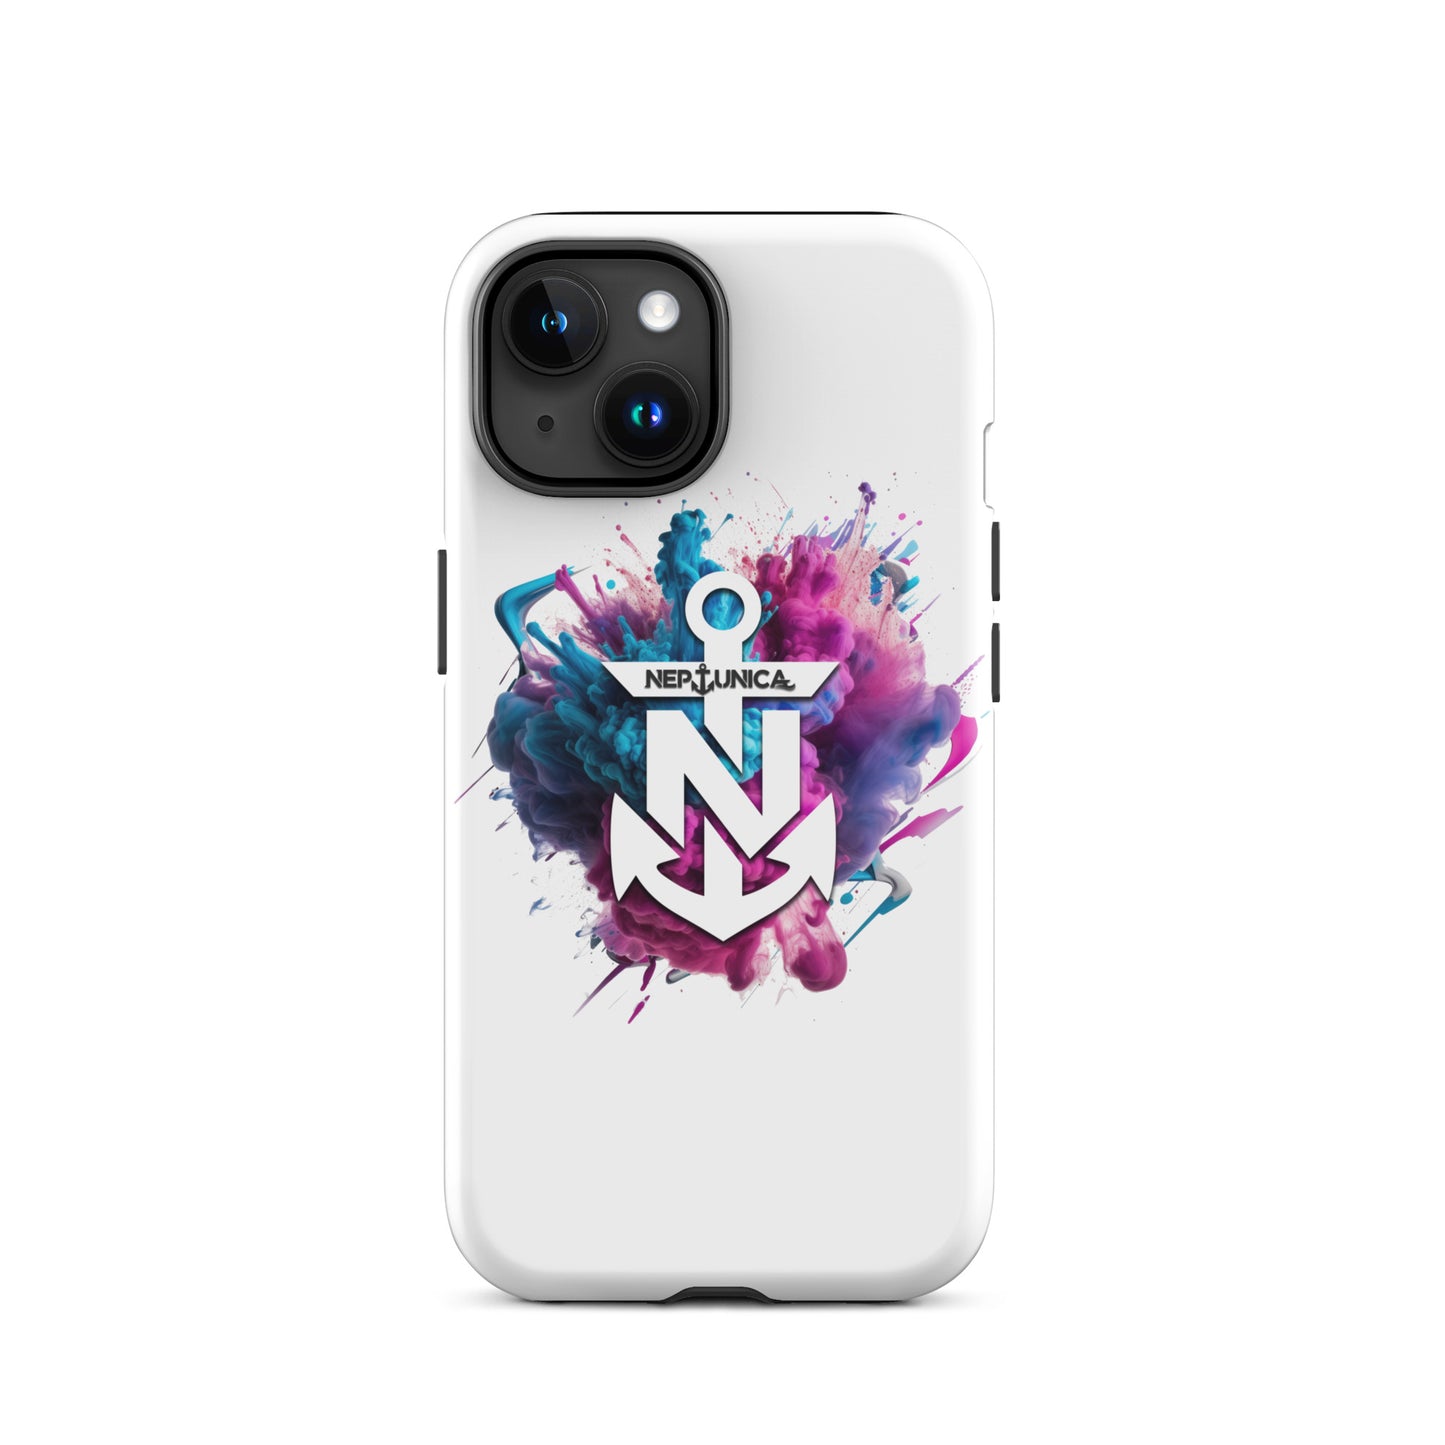 Neptunica iPhone® Tough Case | Colorsplash Edition